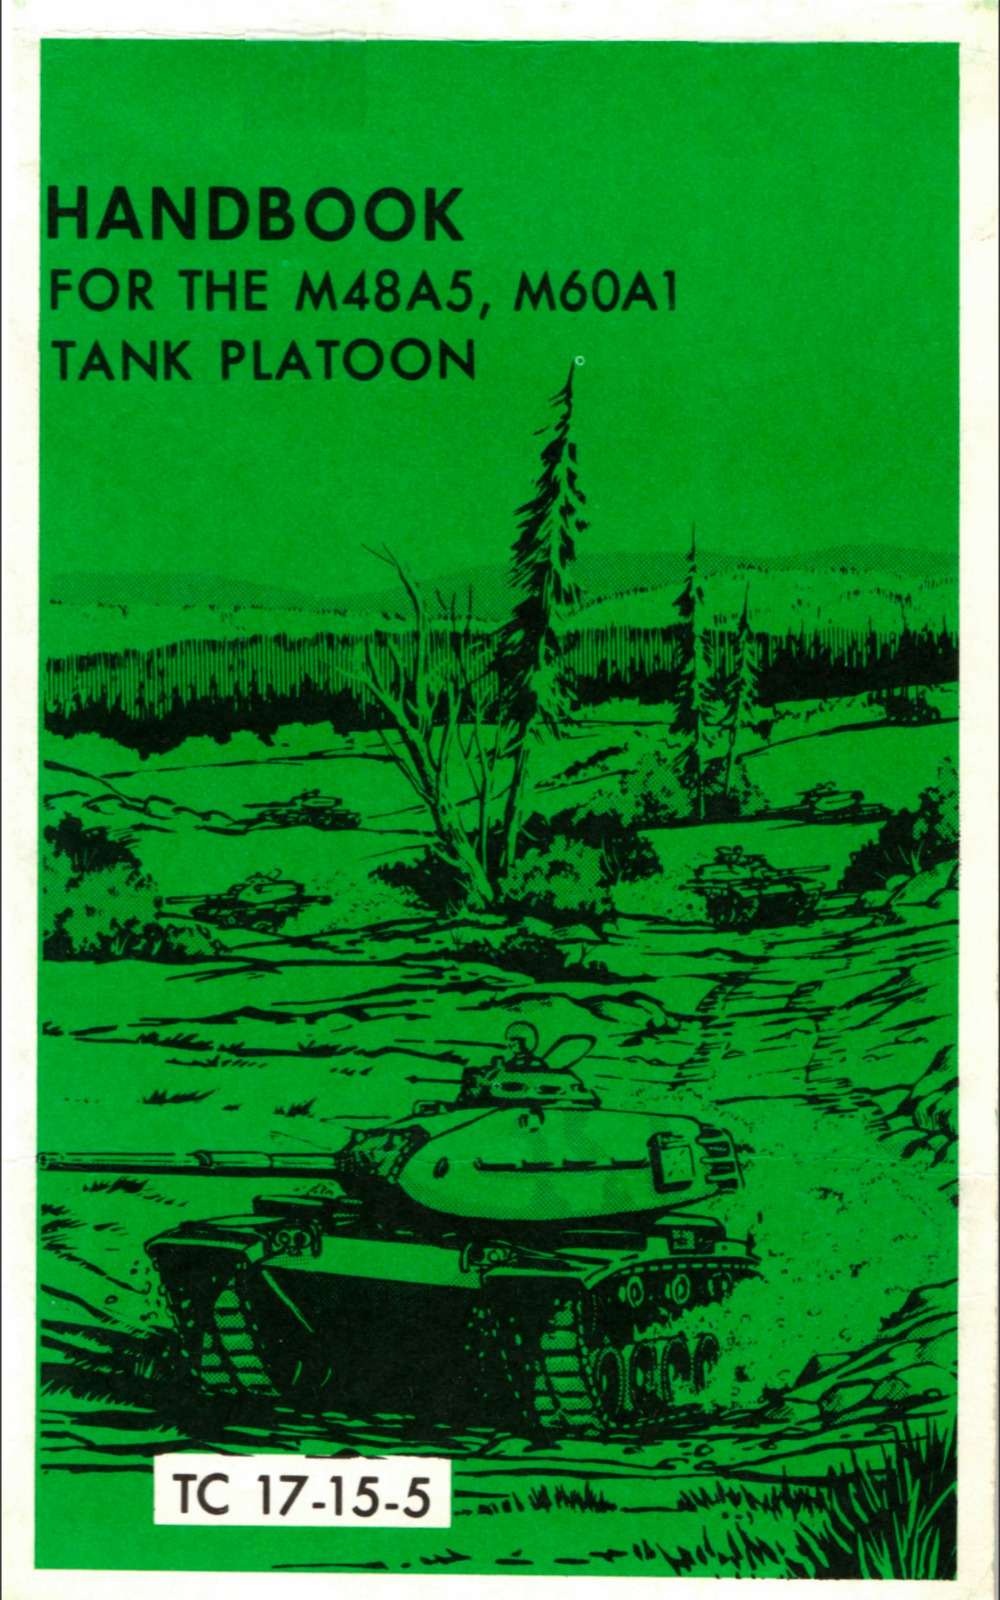 215 Page 1978 TC 17-15-5 HANDBOOK M48A5 PATTON M60A1 TANK PLATOON Pub on Data CD